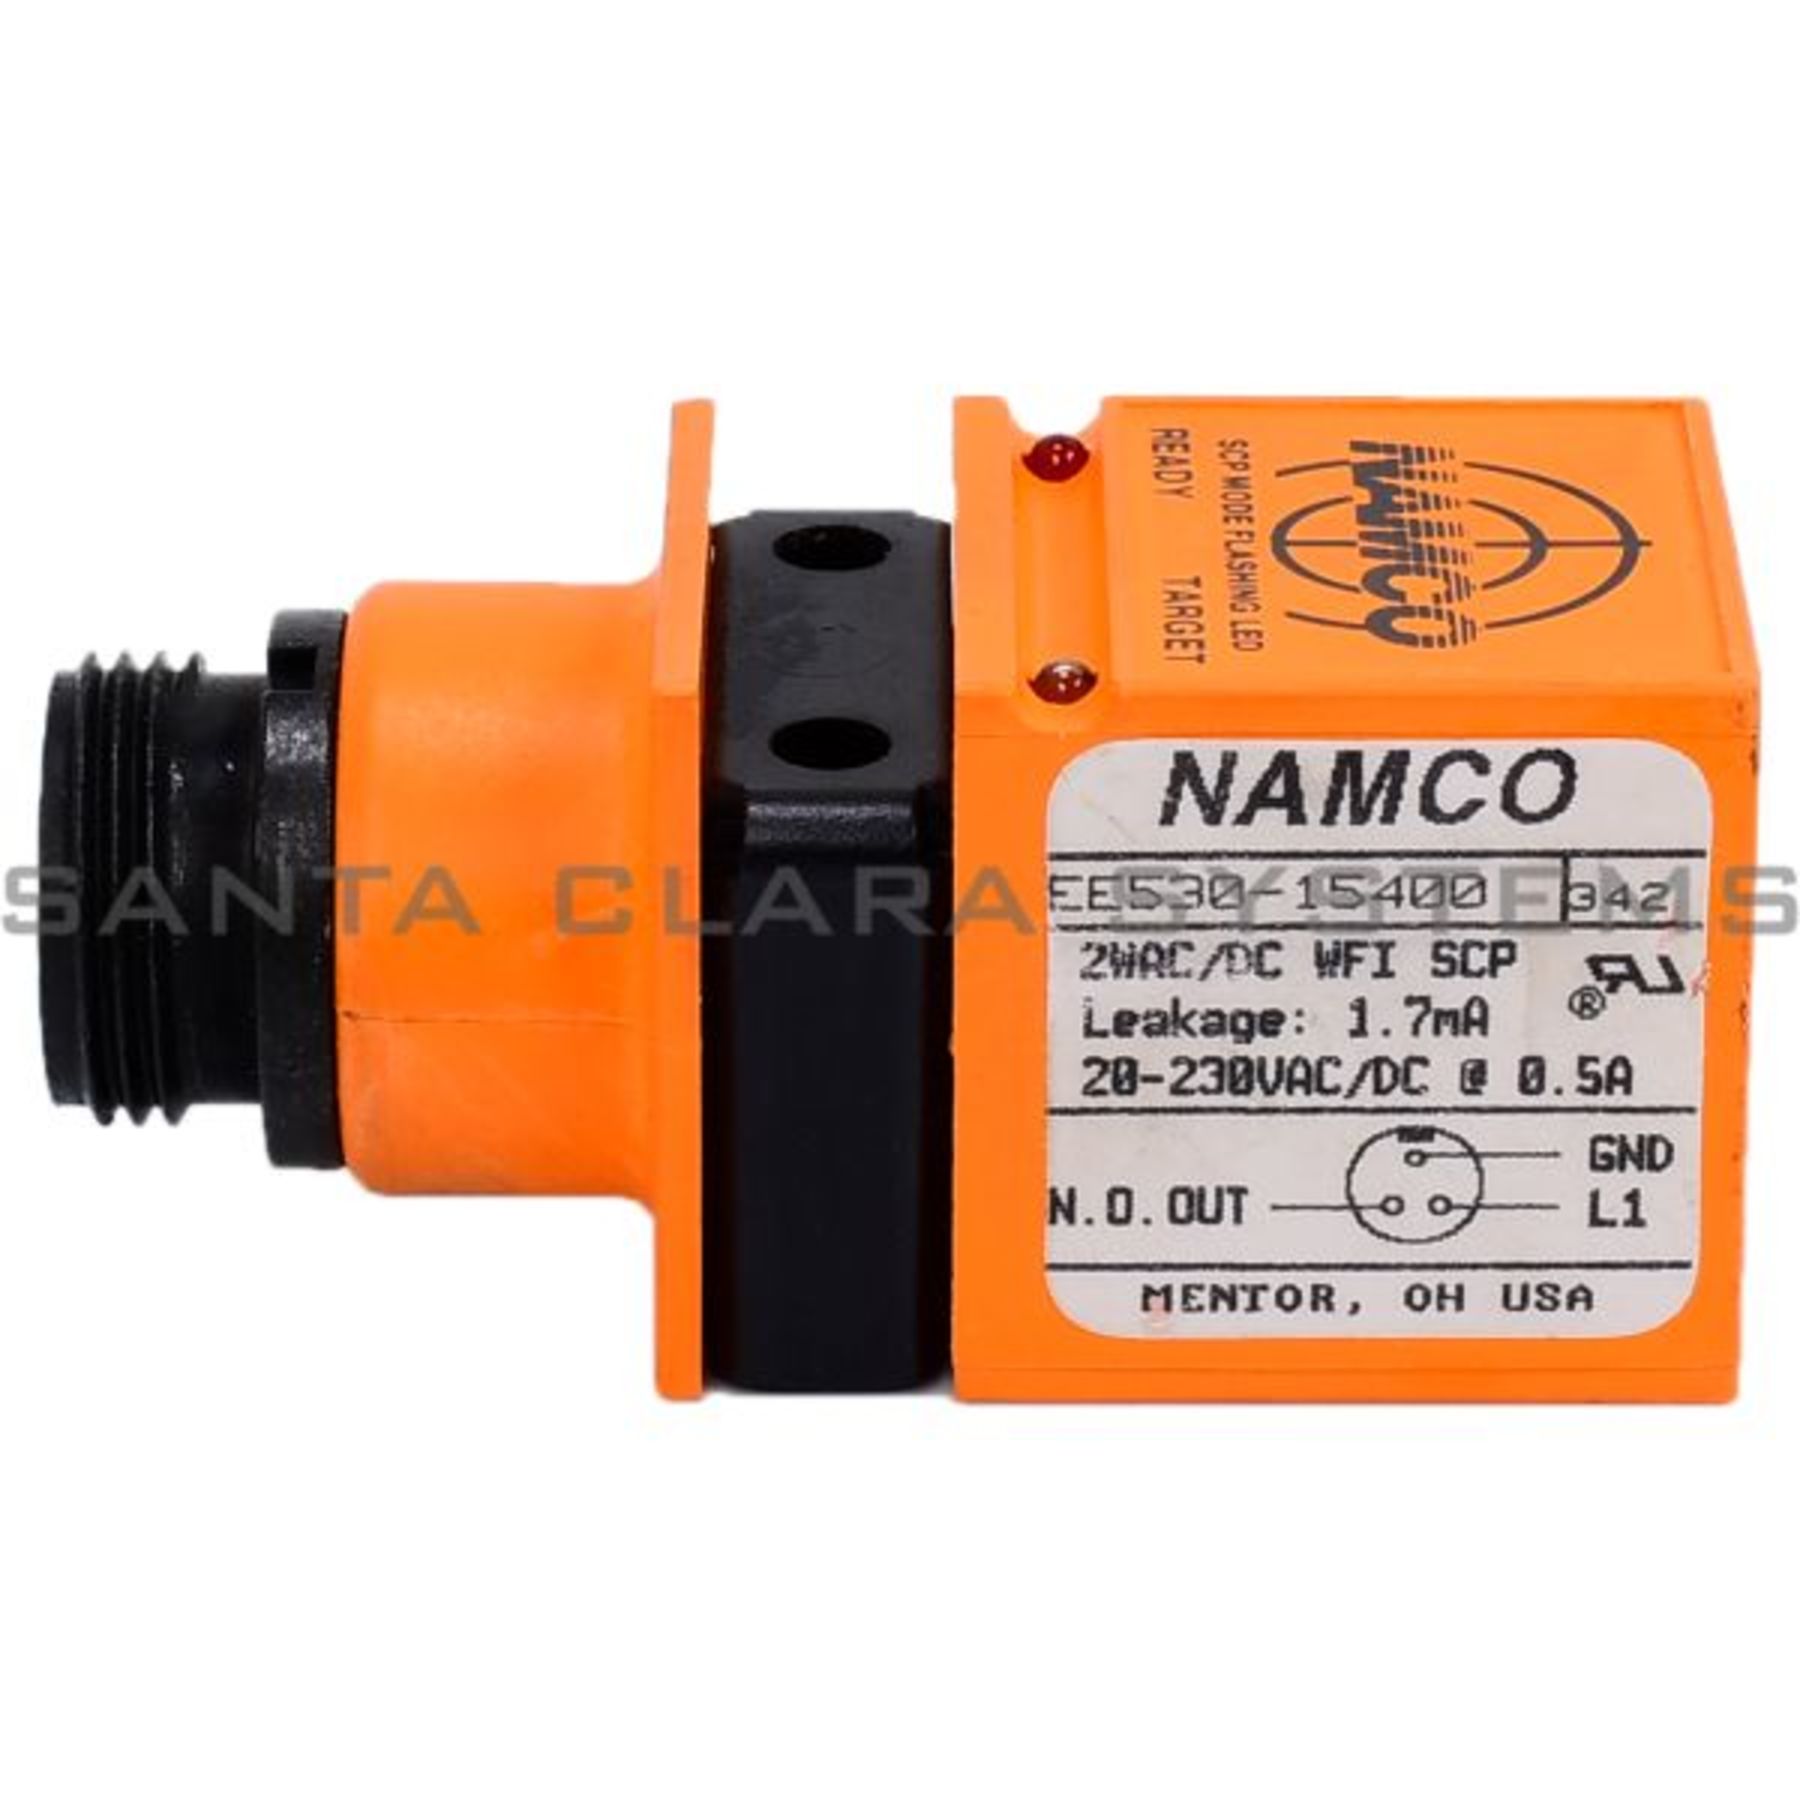 NAMCO EE530-15400 PROXIMITY SWITCH 